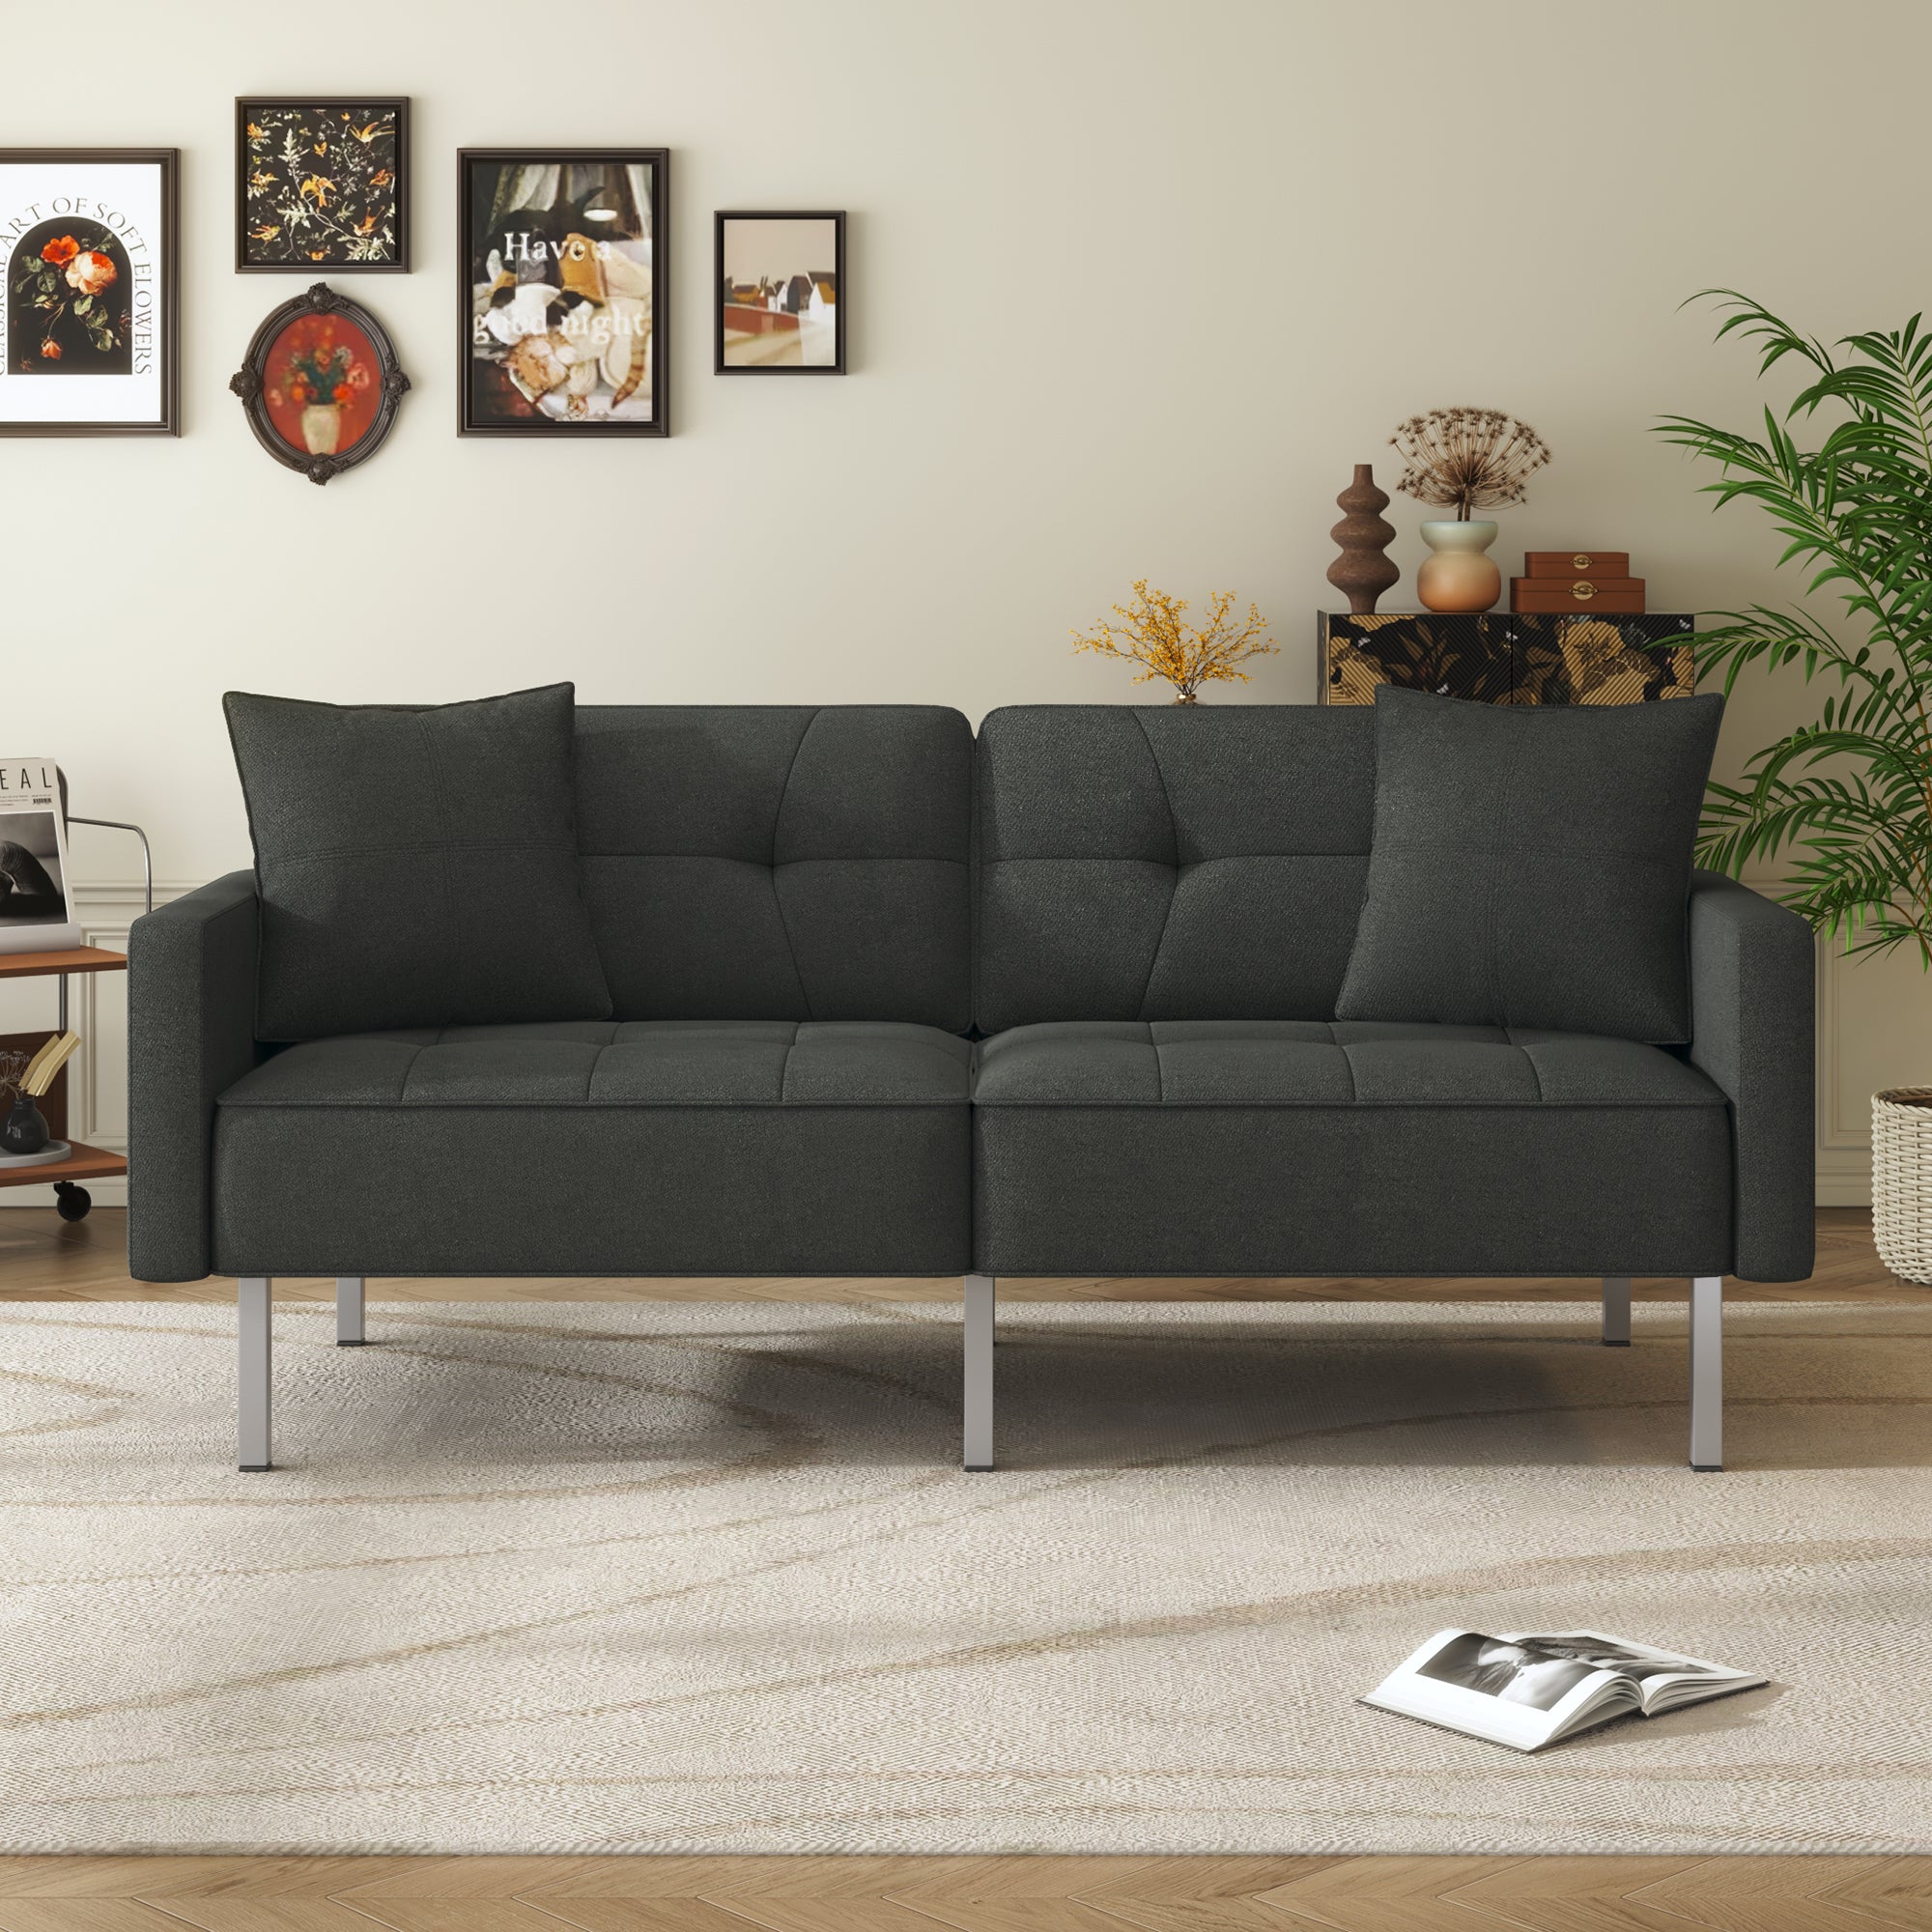 Orisfur.-Linen-Upholstered-Modern-Convertible-Folding-Futon-Sofa-Bed-for-Compact-Living-Space,-Apartment,-Dorm,-Black-